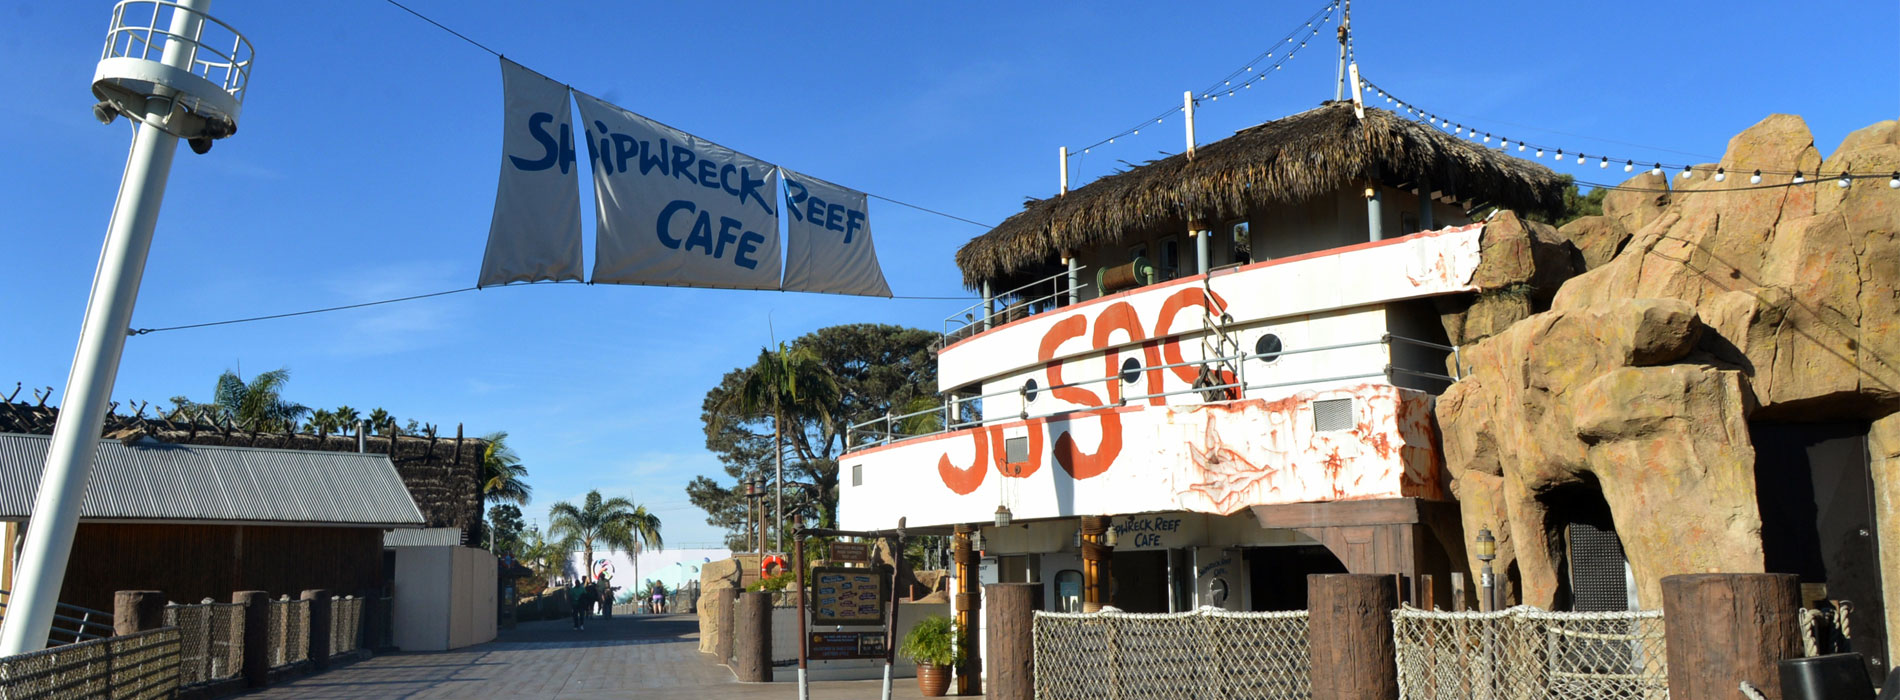 Shipwreck Reef Cafe